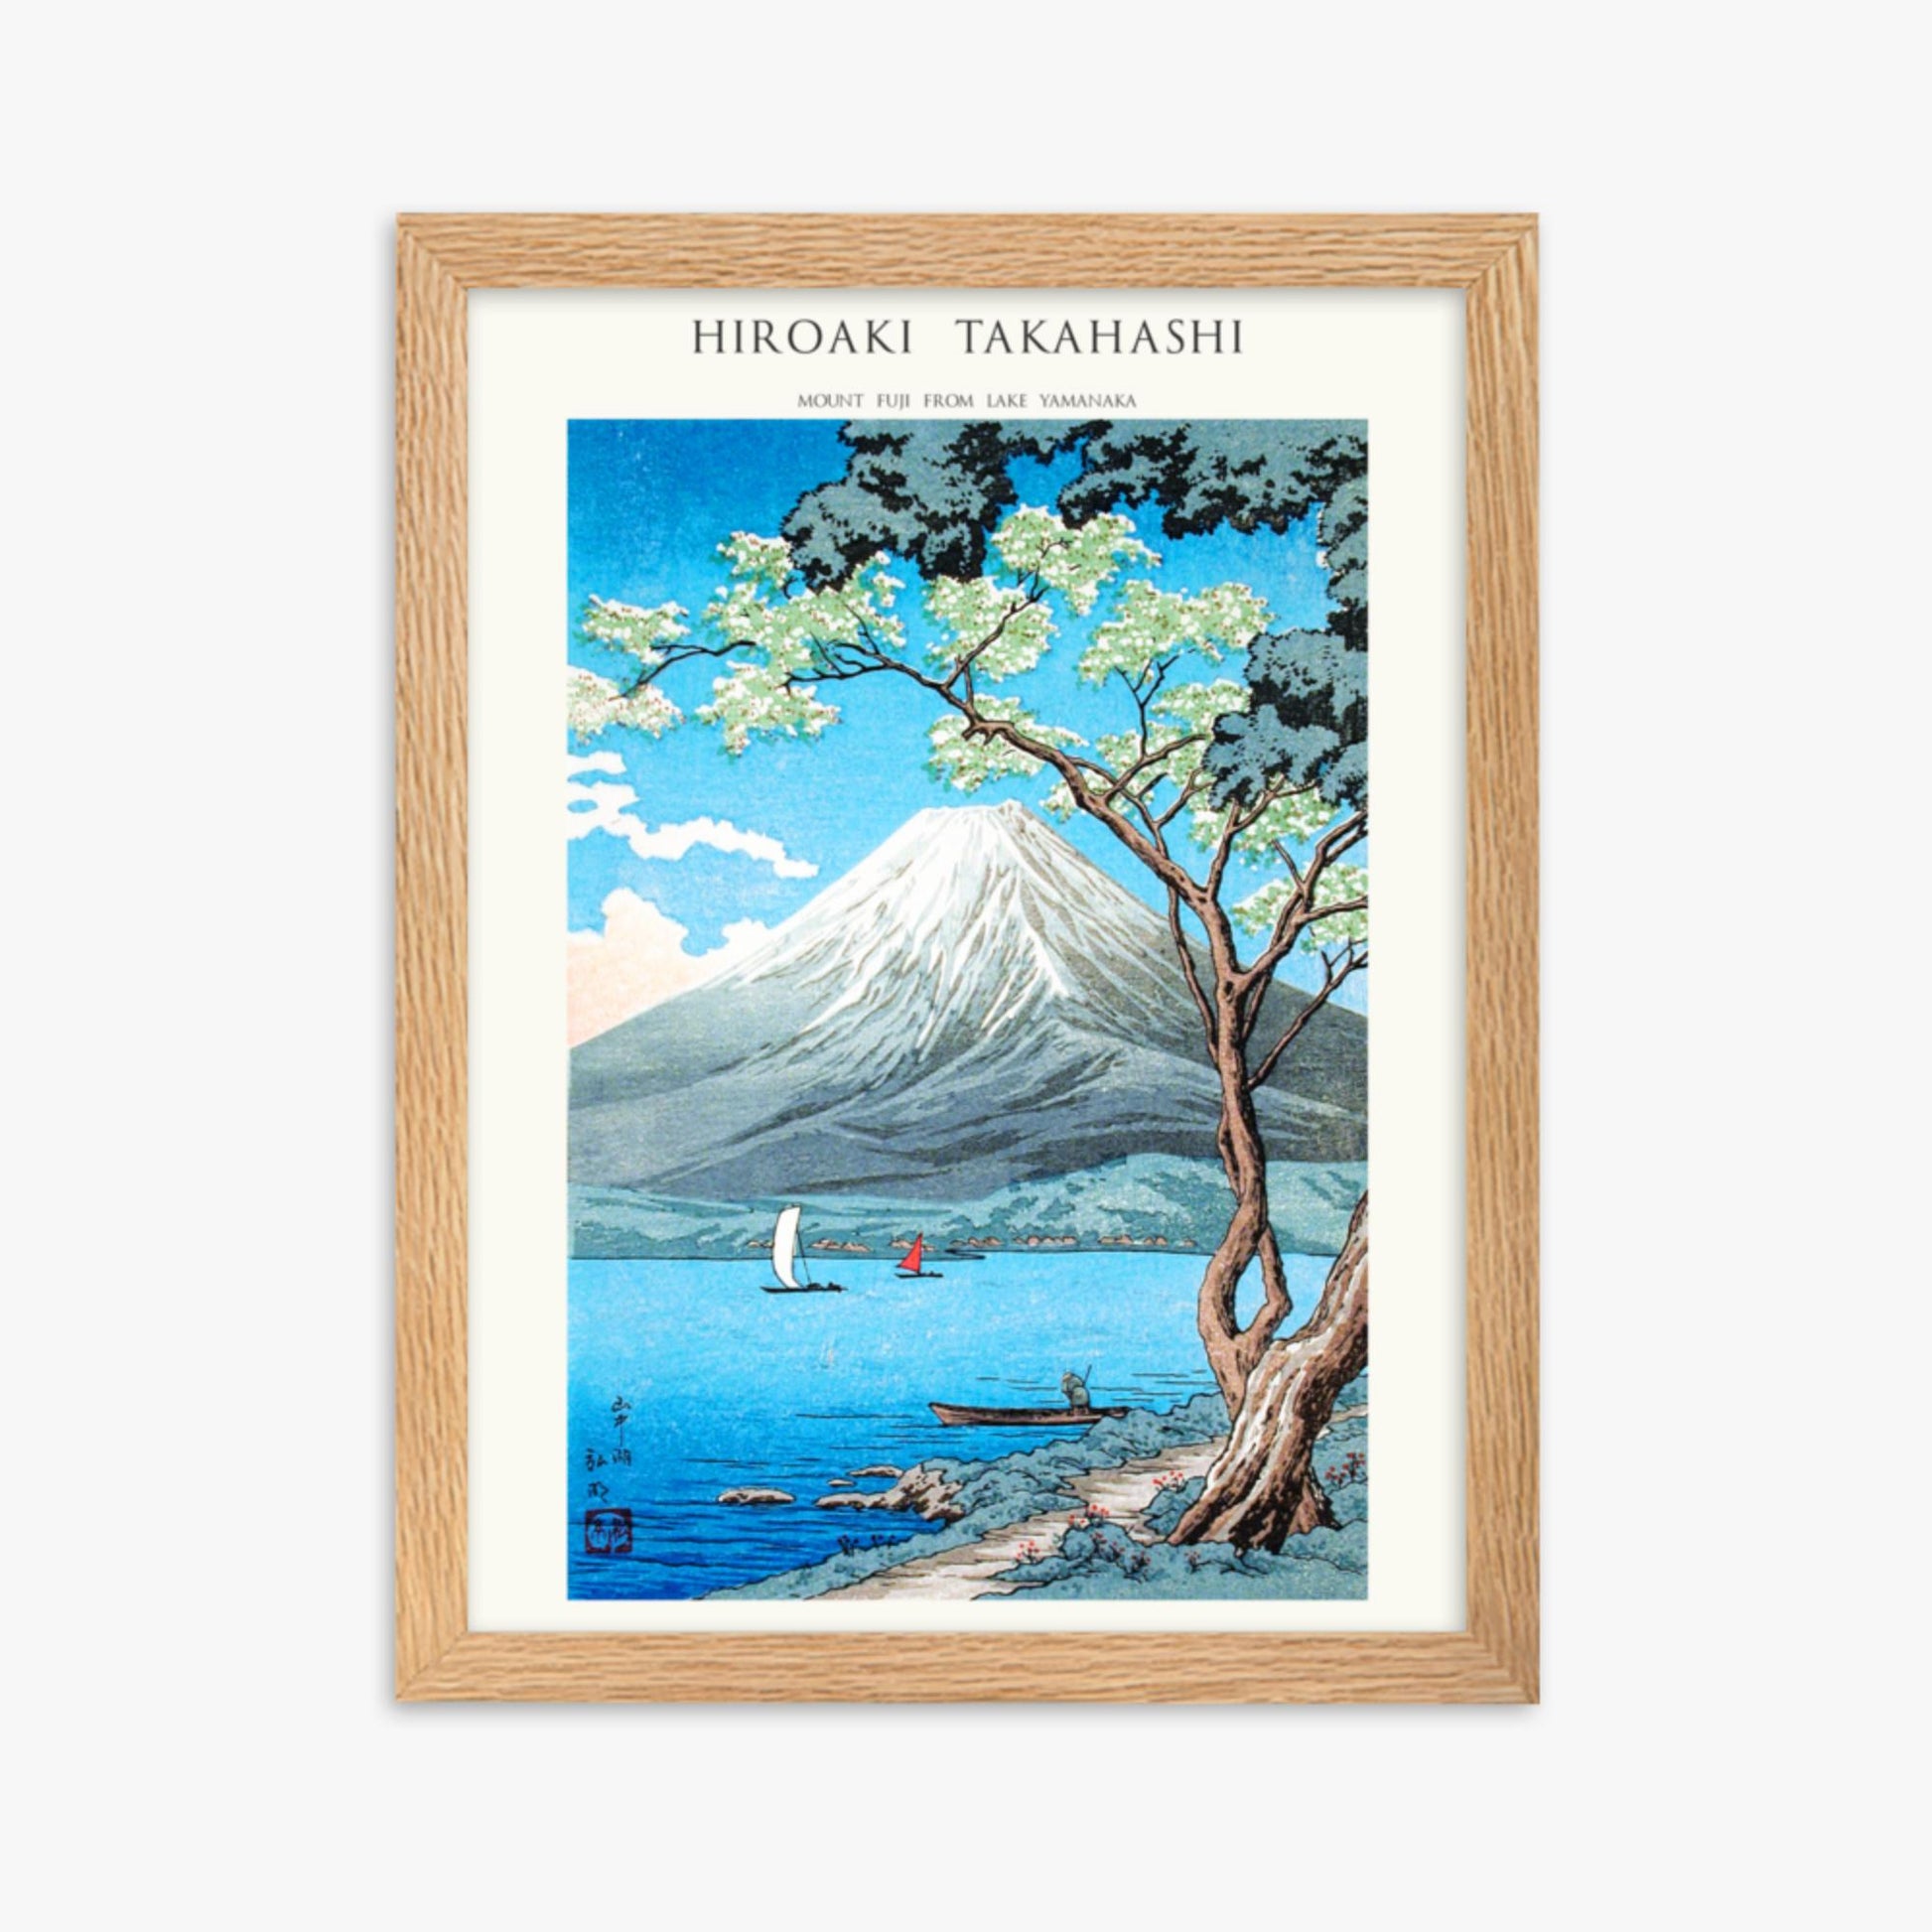 Hiroaki Takahashi - Mount Fuji from Lake Yamanaka - Decoration 30x40 cm Poster With Oak Frame